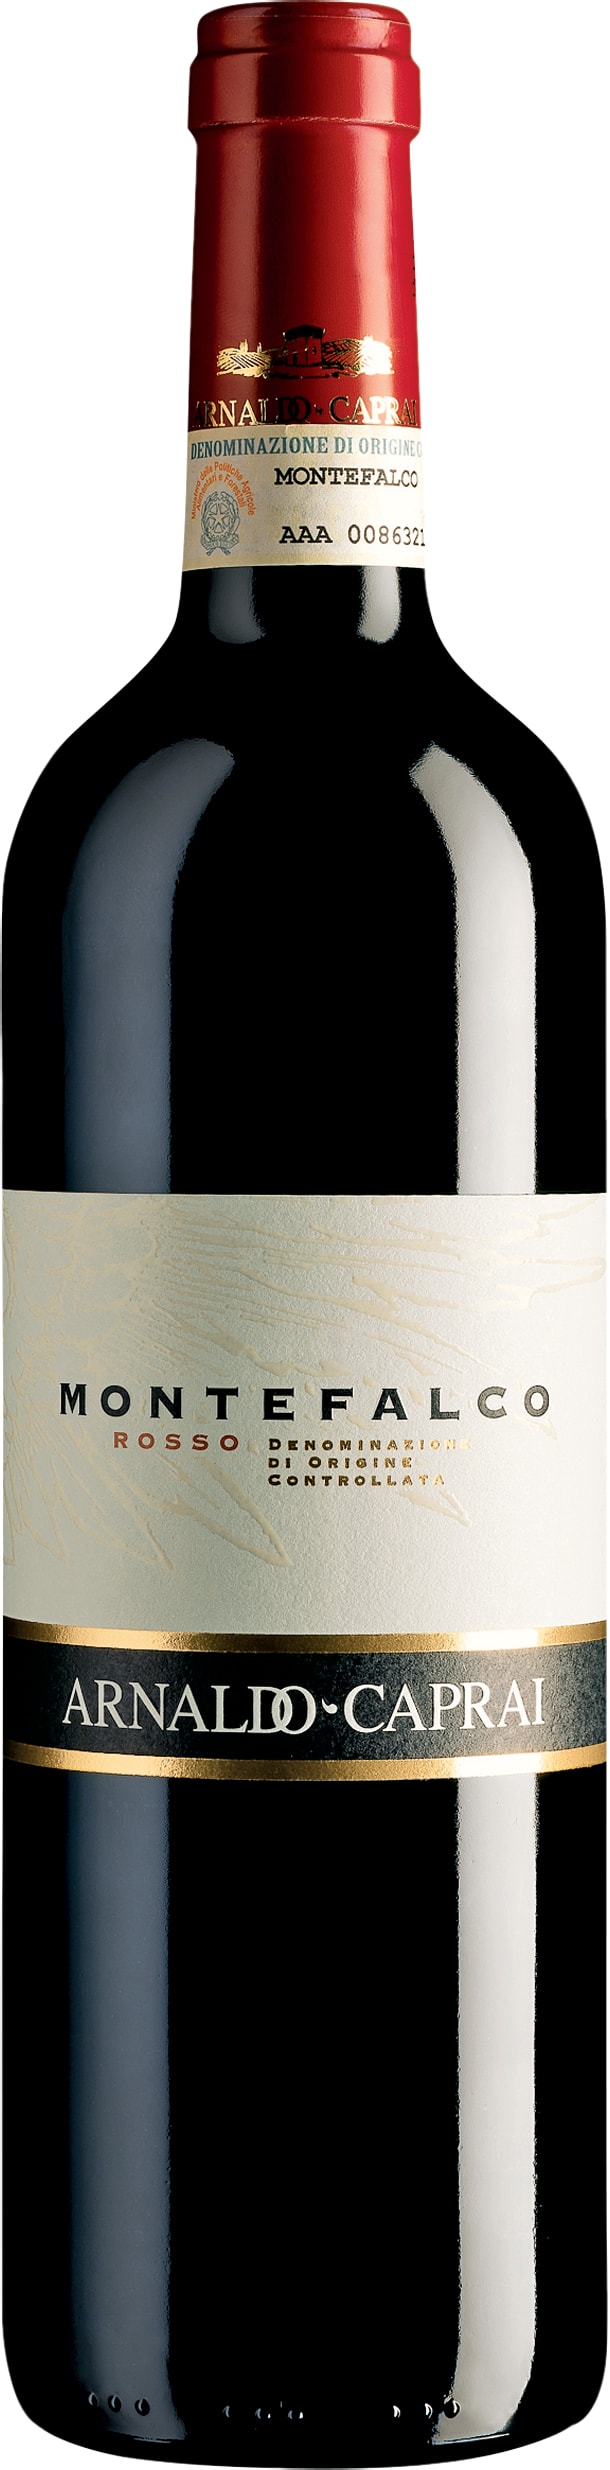 Arnaldo Caprai Montefalco Rosso 2020 75cl - Buy Arnaldo Caprai Wines from GREAT WINES DIRECT wine shop